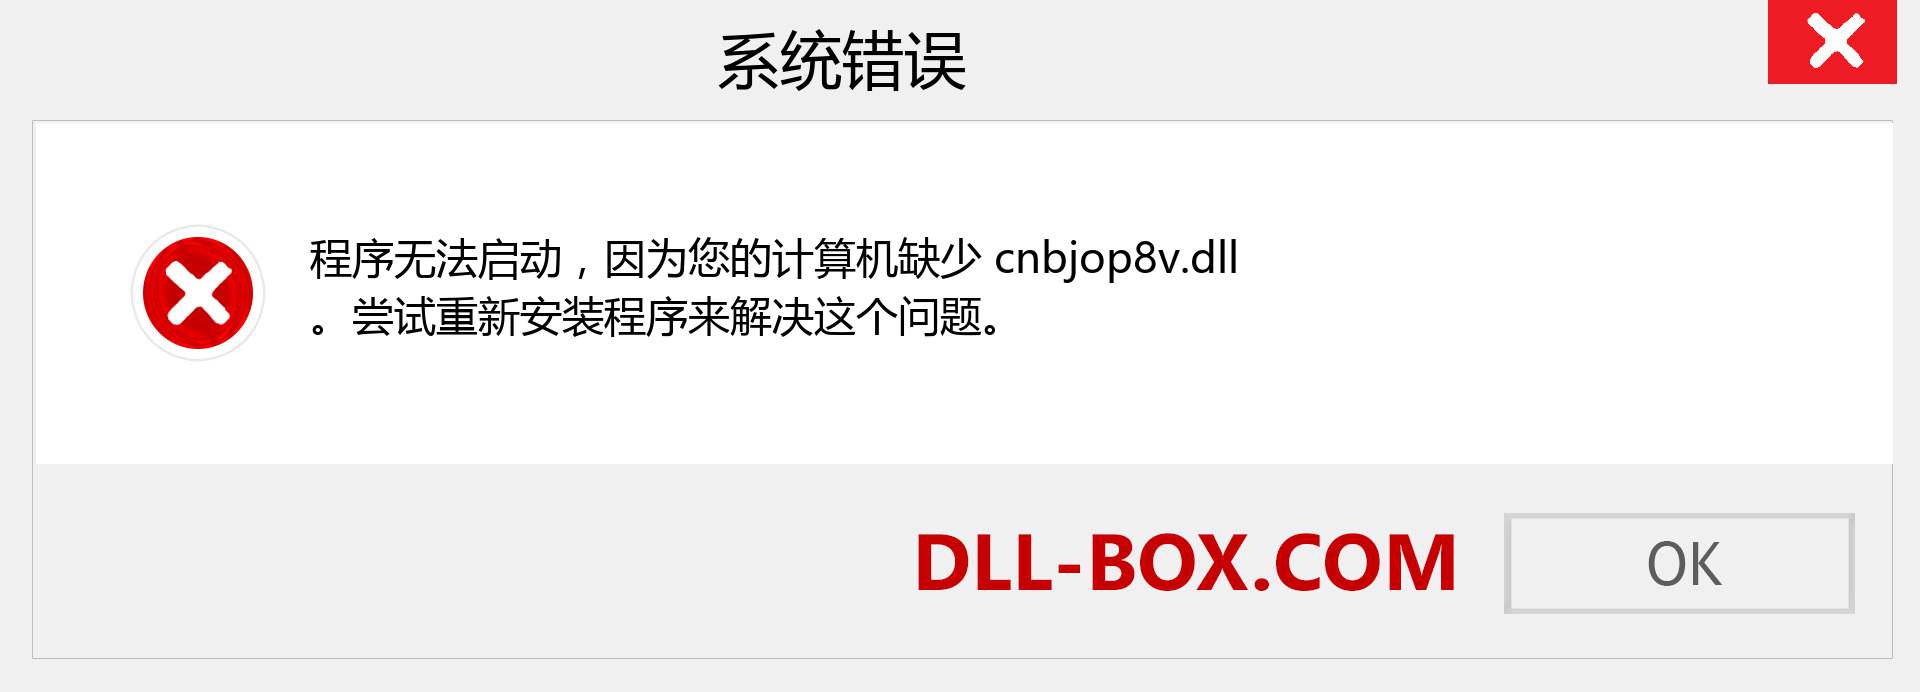 cnbjop8v.dll 文件丢失？。 适用于 Windows 7、8、10 的下载 - 修复 Windows、照片、图像上的 cnbjop8v dll 丢失错误